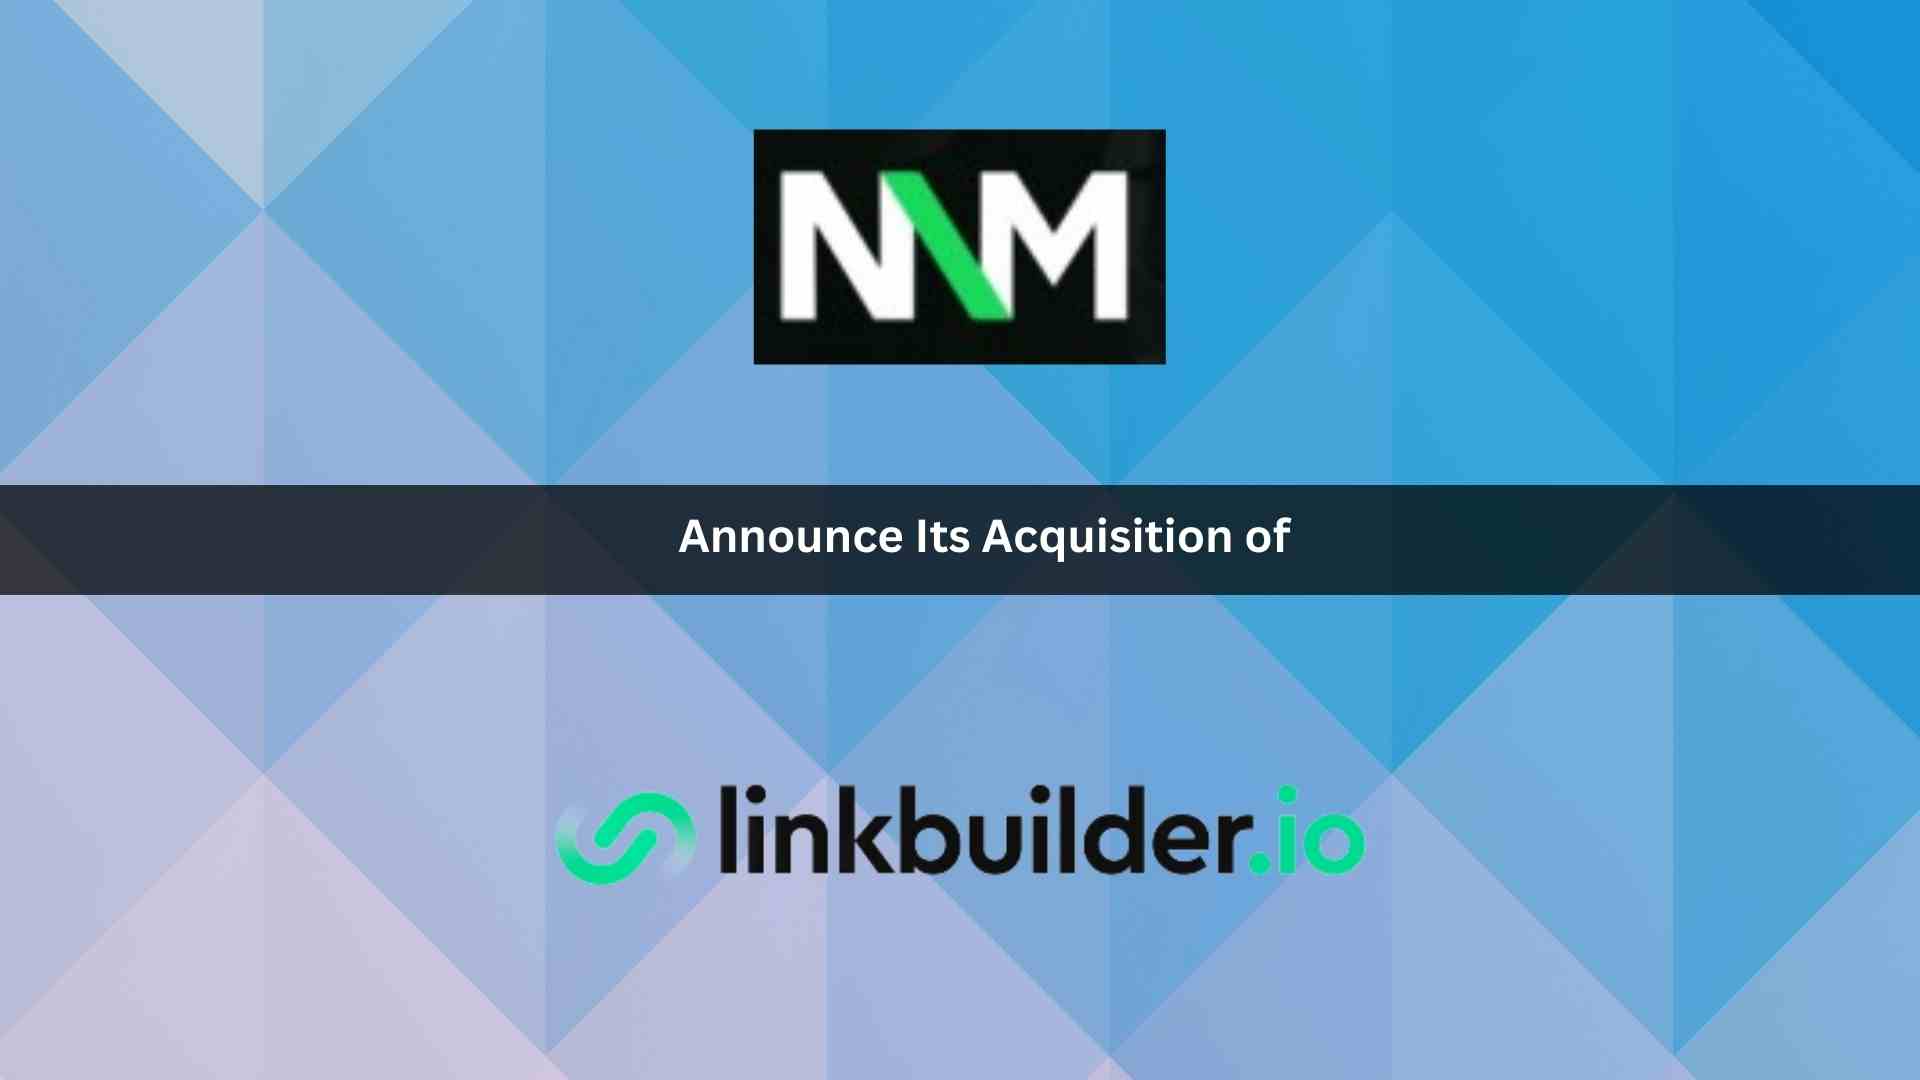 Next Net Media Strengthens Digital Marketing Capabilities with Strategic Acquisition of LinkBuilder.io